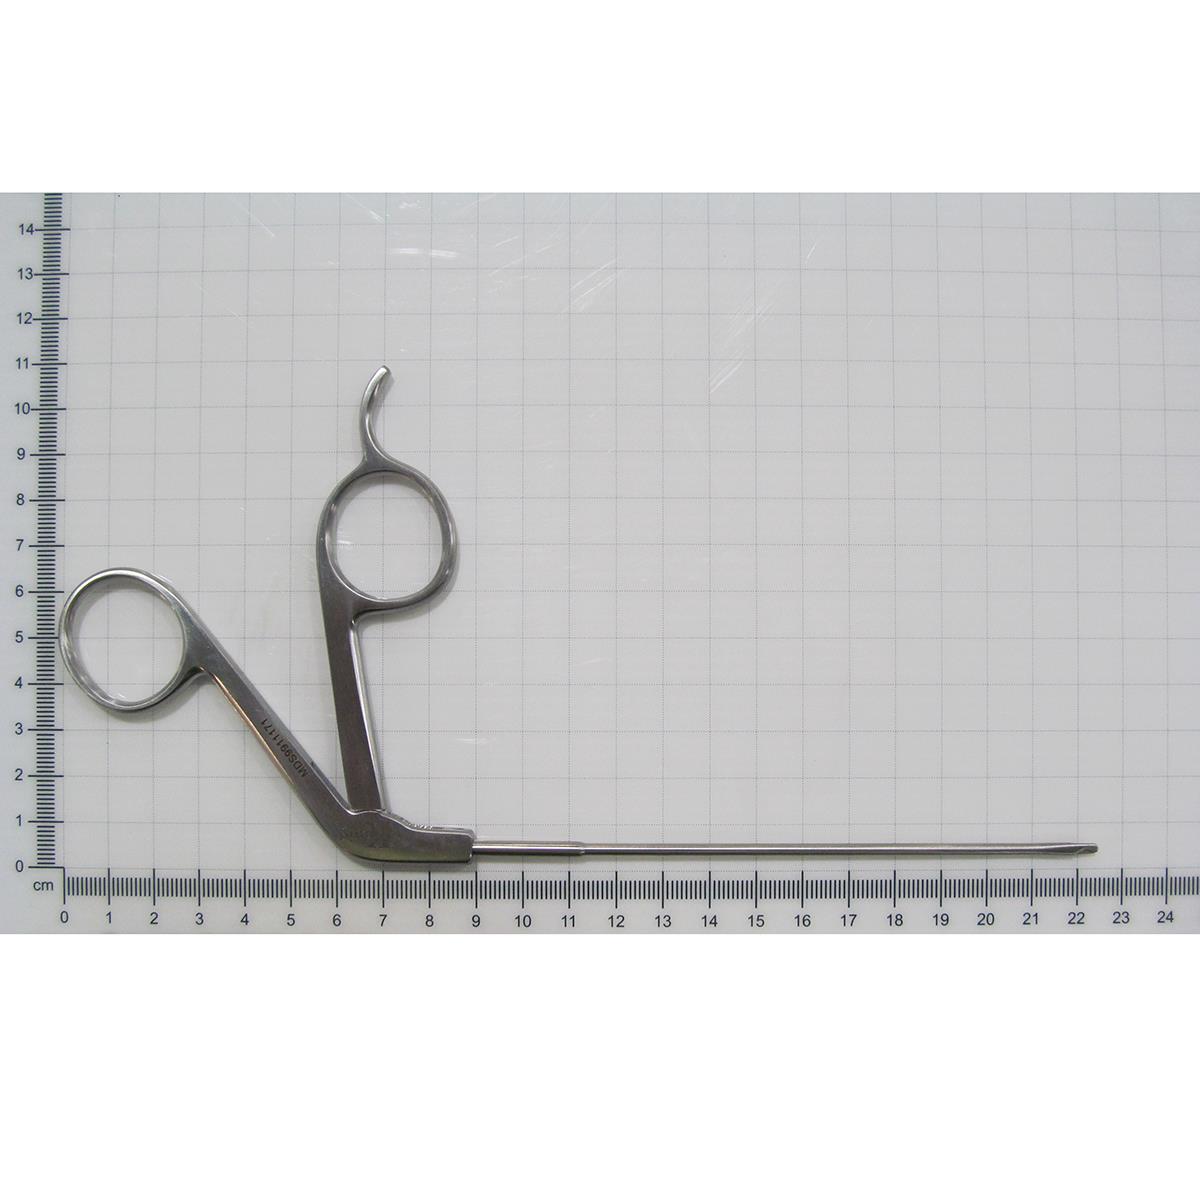 König Arthroscopic Hook Scissors | Medline Industries, Inc.